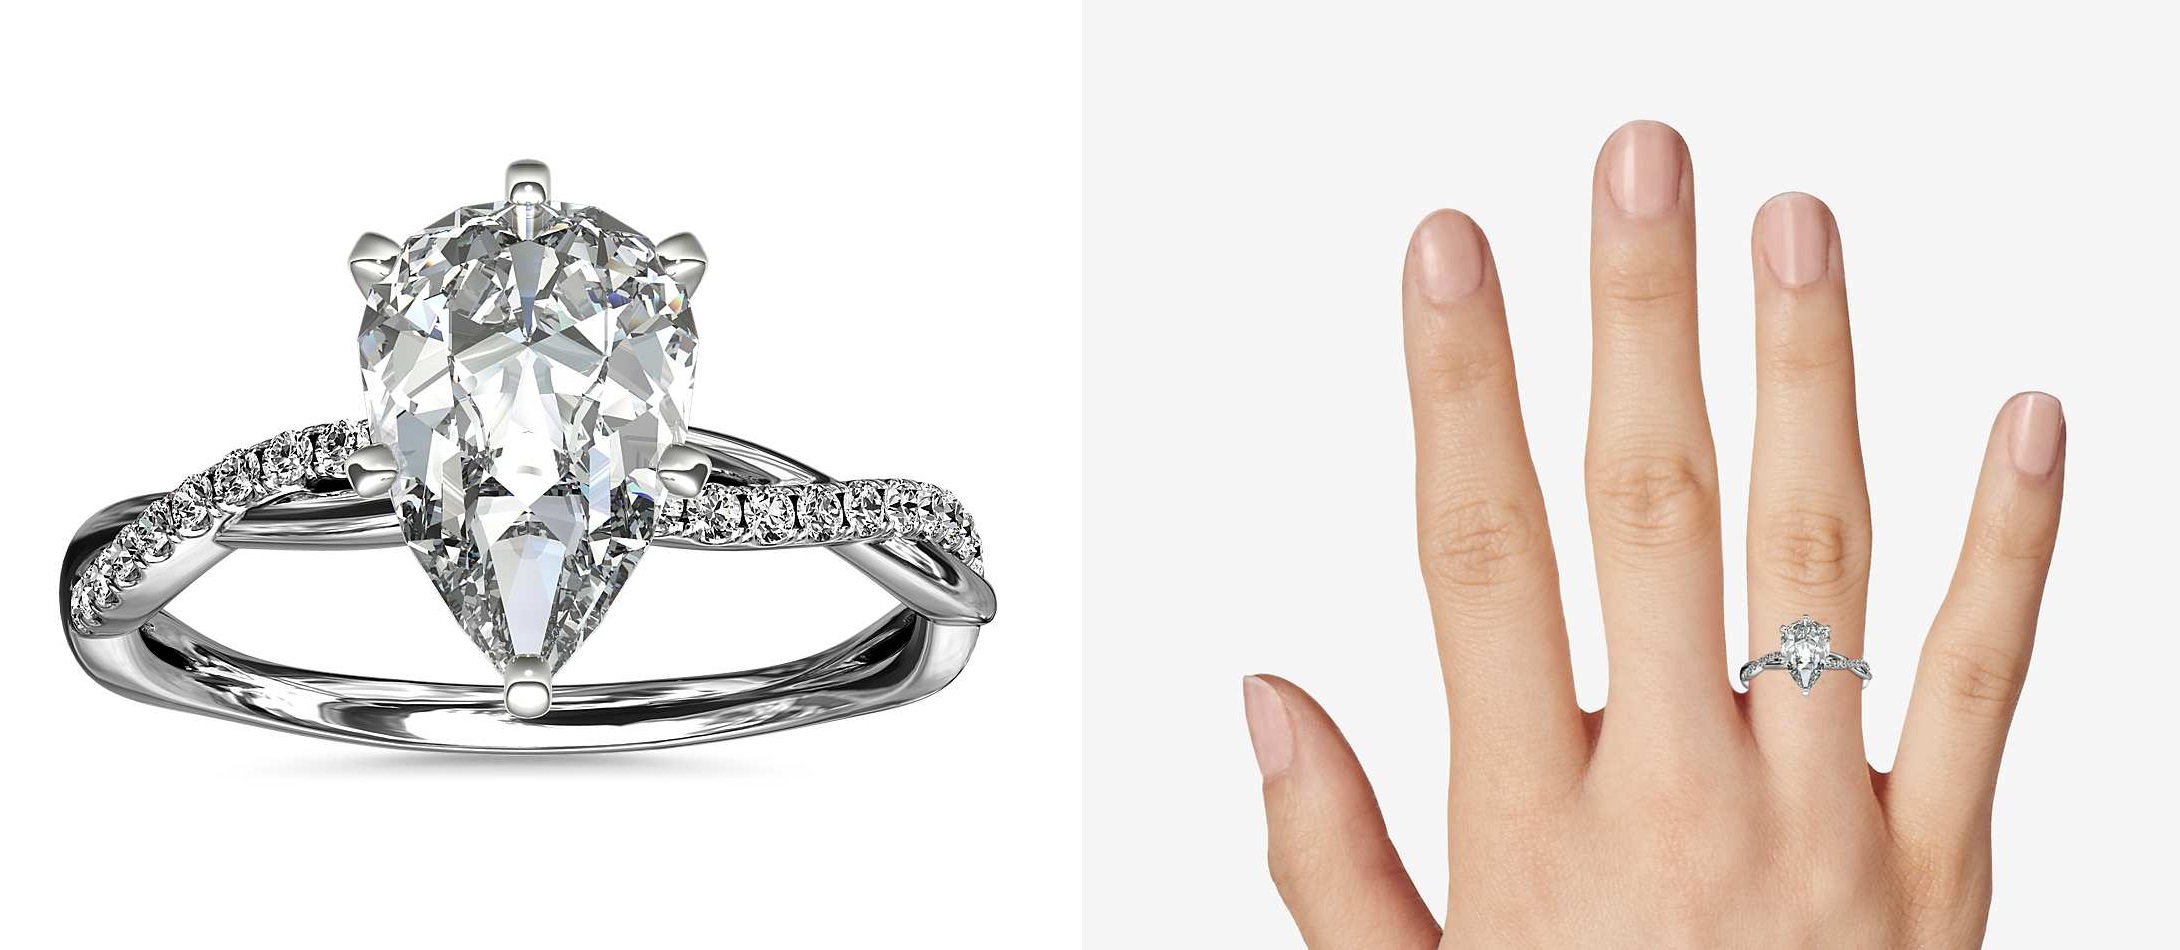 2 carat teardrop diamond ring with intertwining shanks